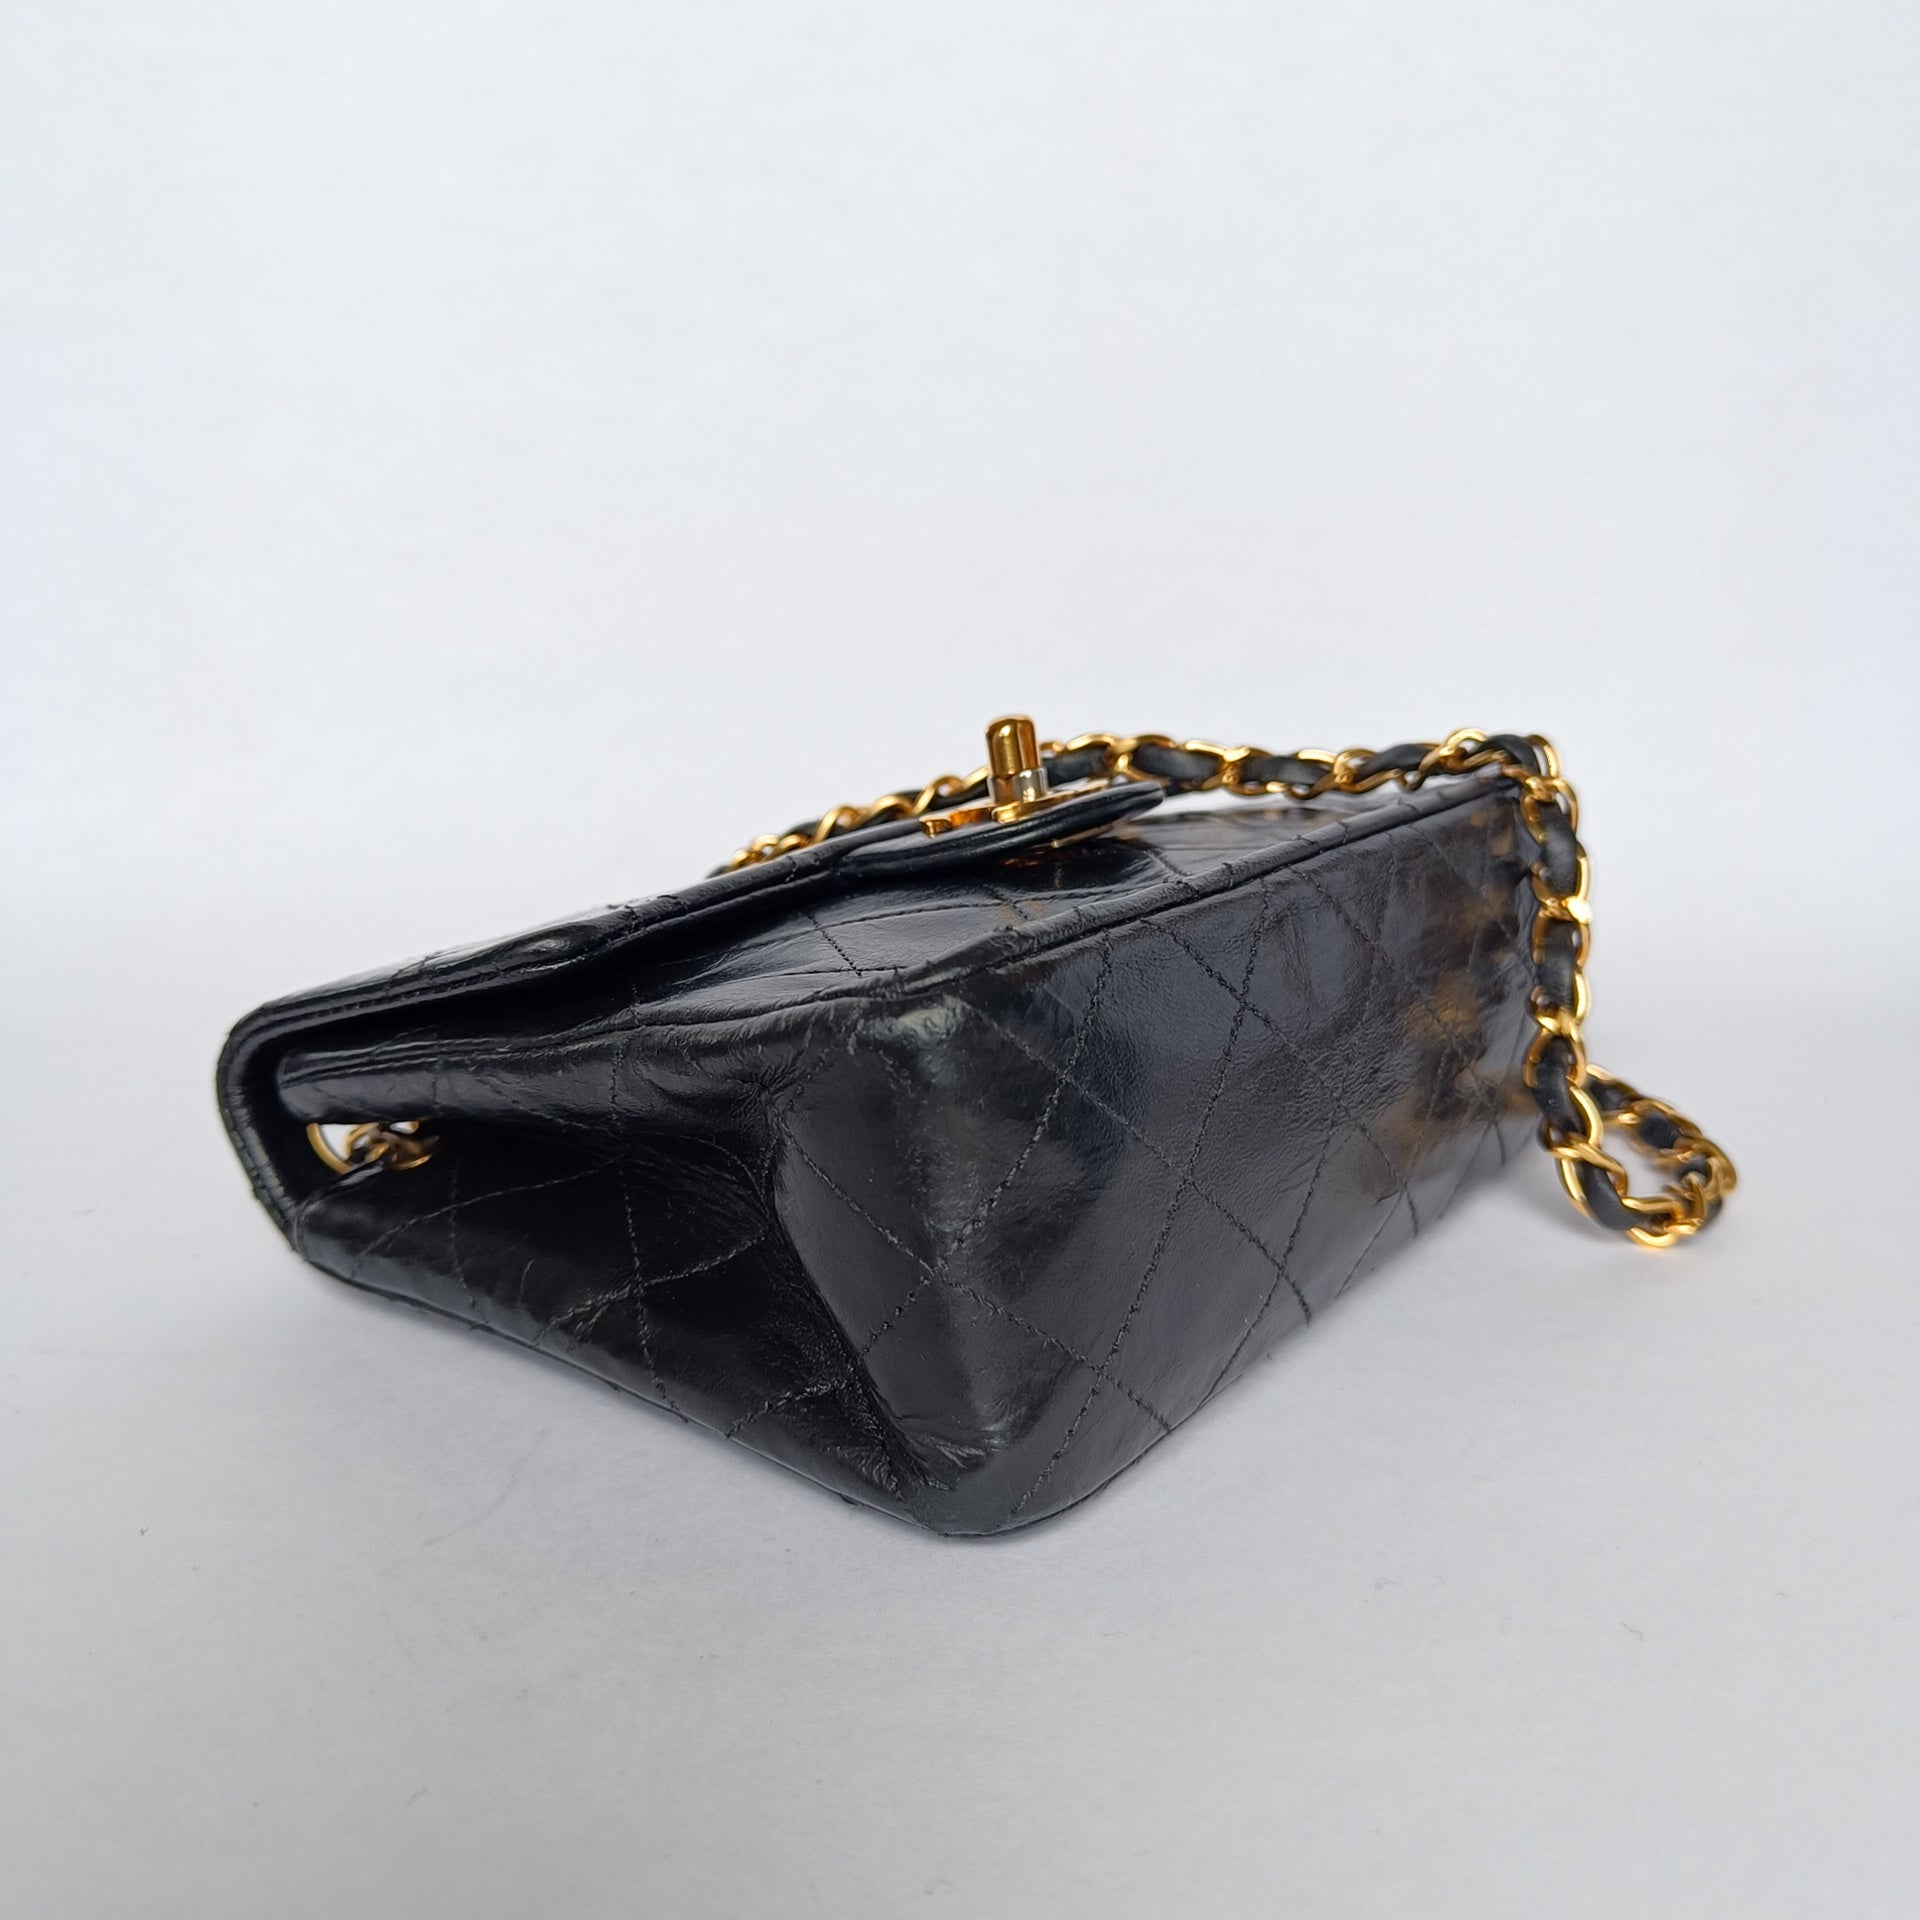 mini black chanel bag vintage